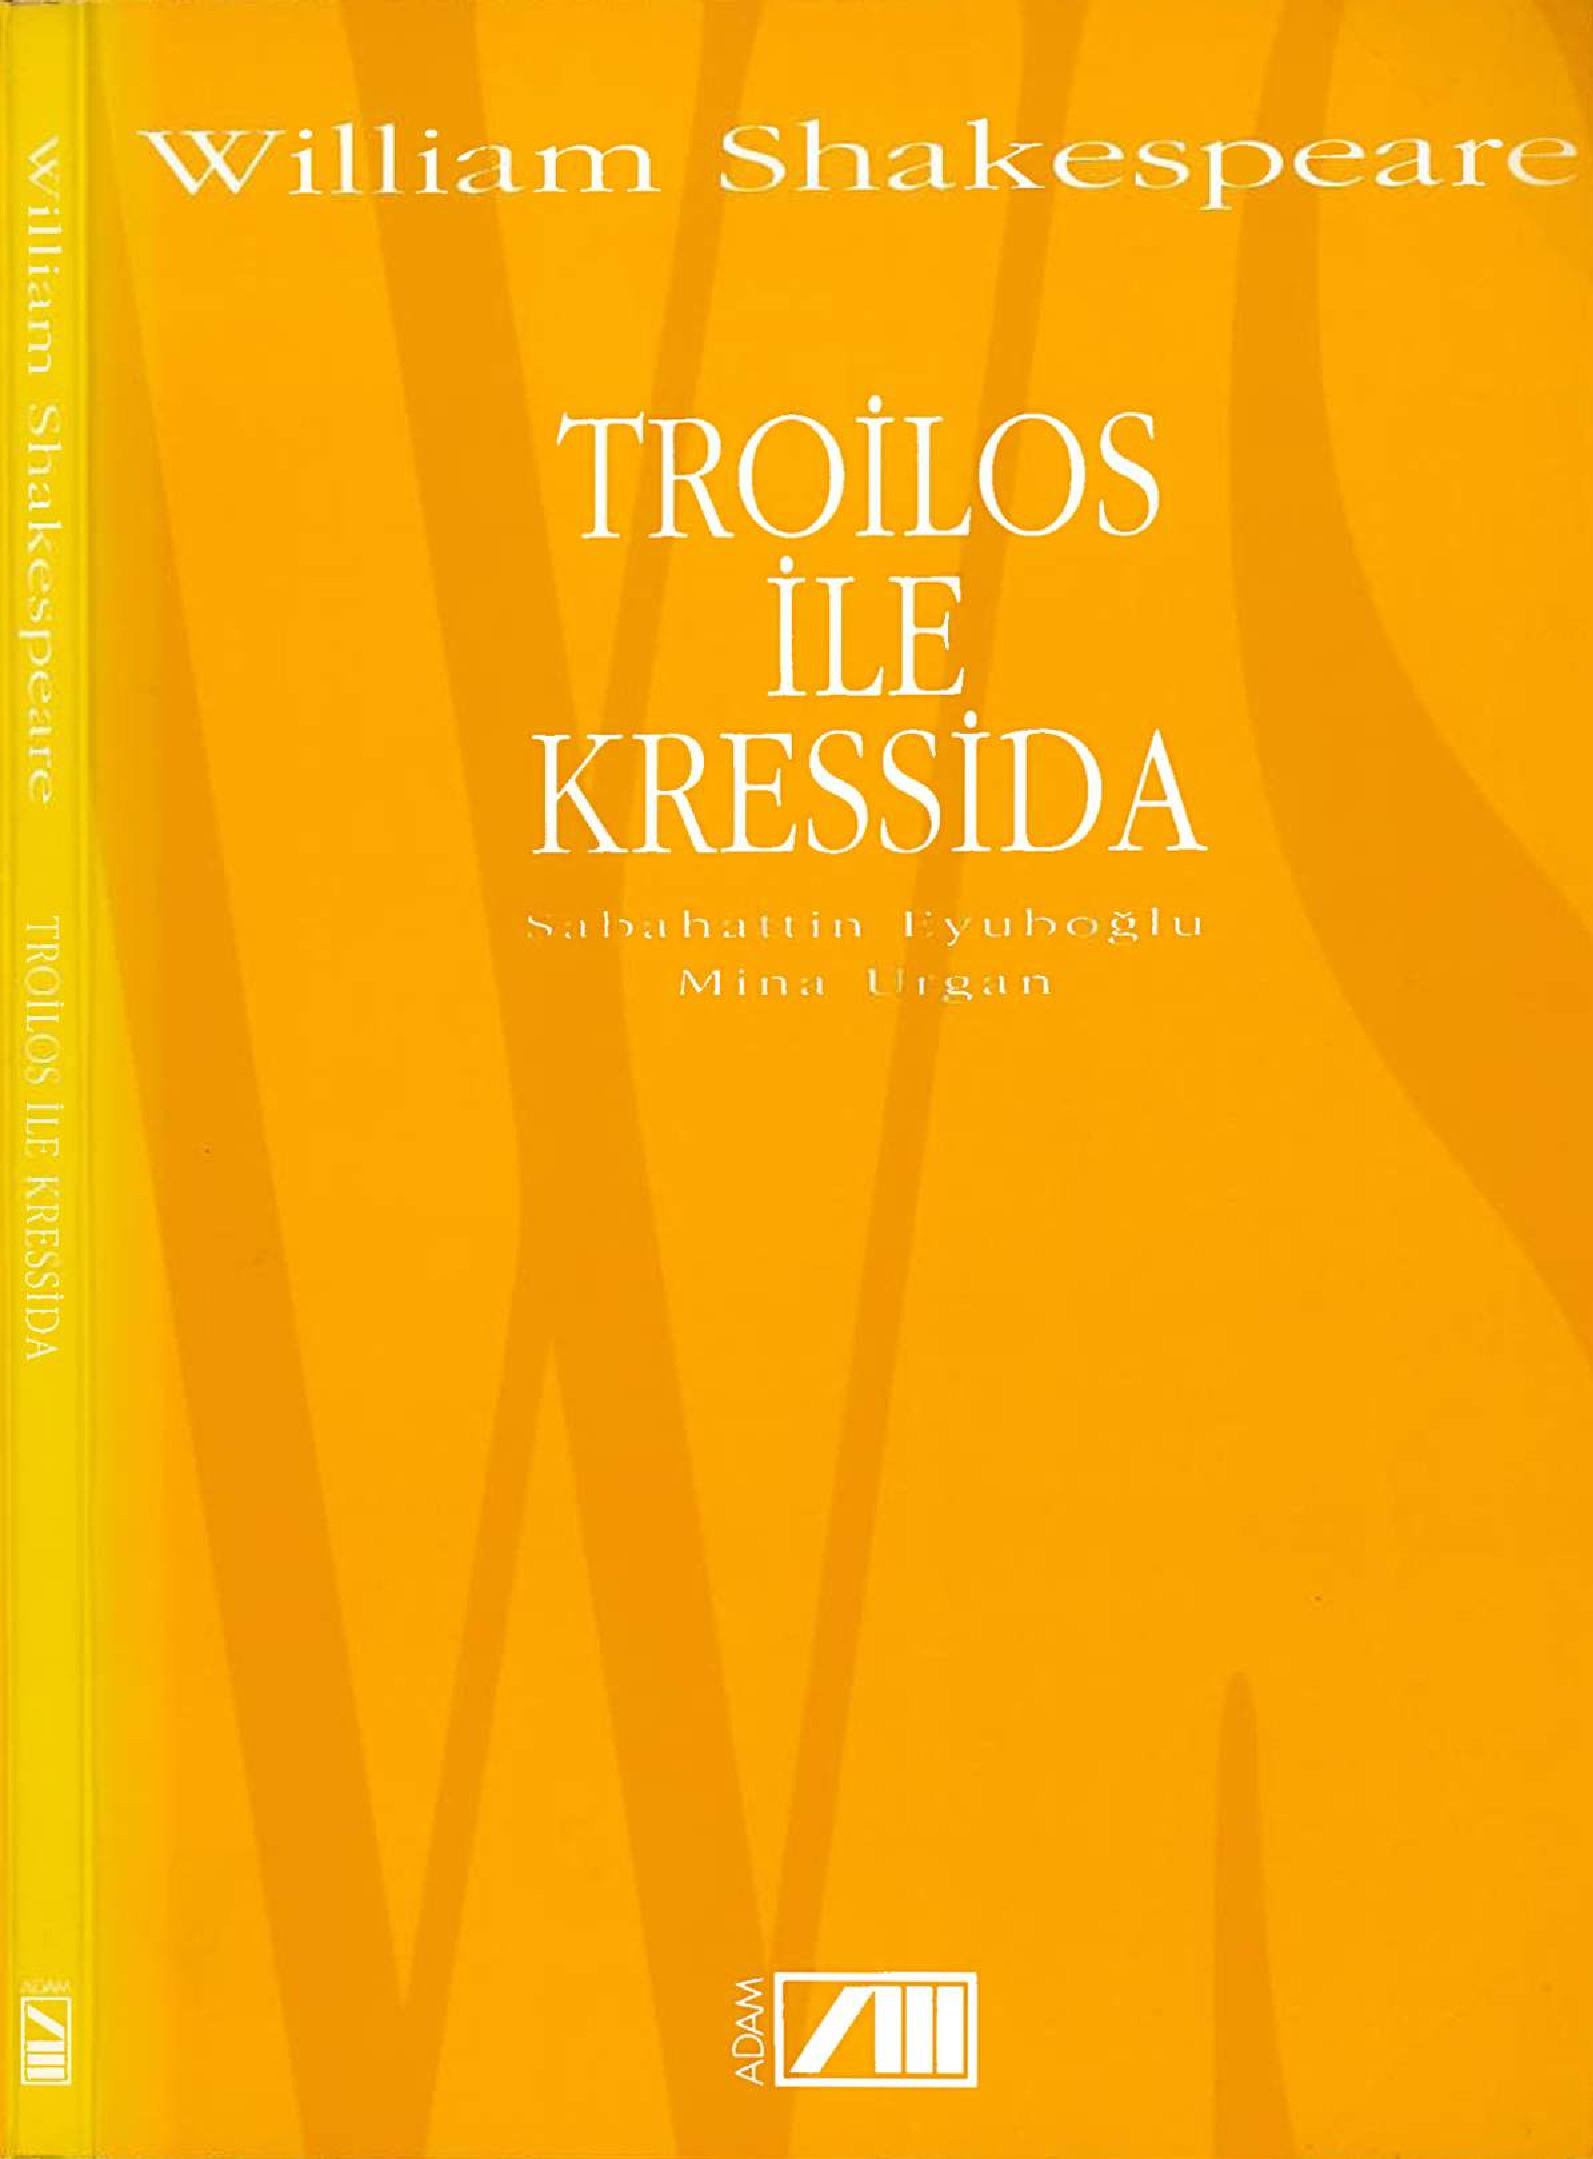 Troilos ile Kressida-William Shakespeare-Ali Neyzi 1993-136s